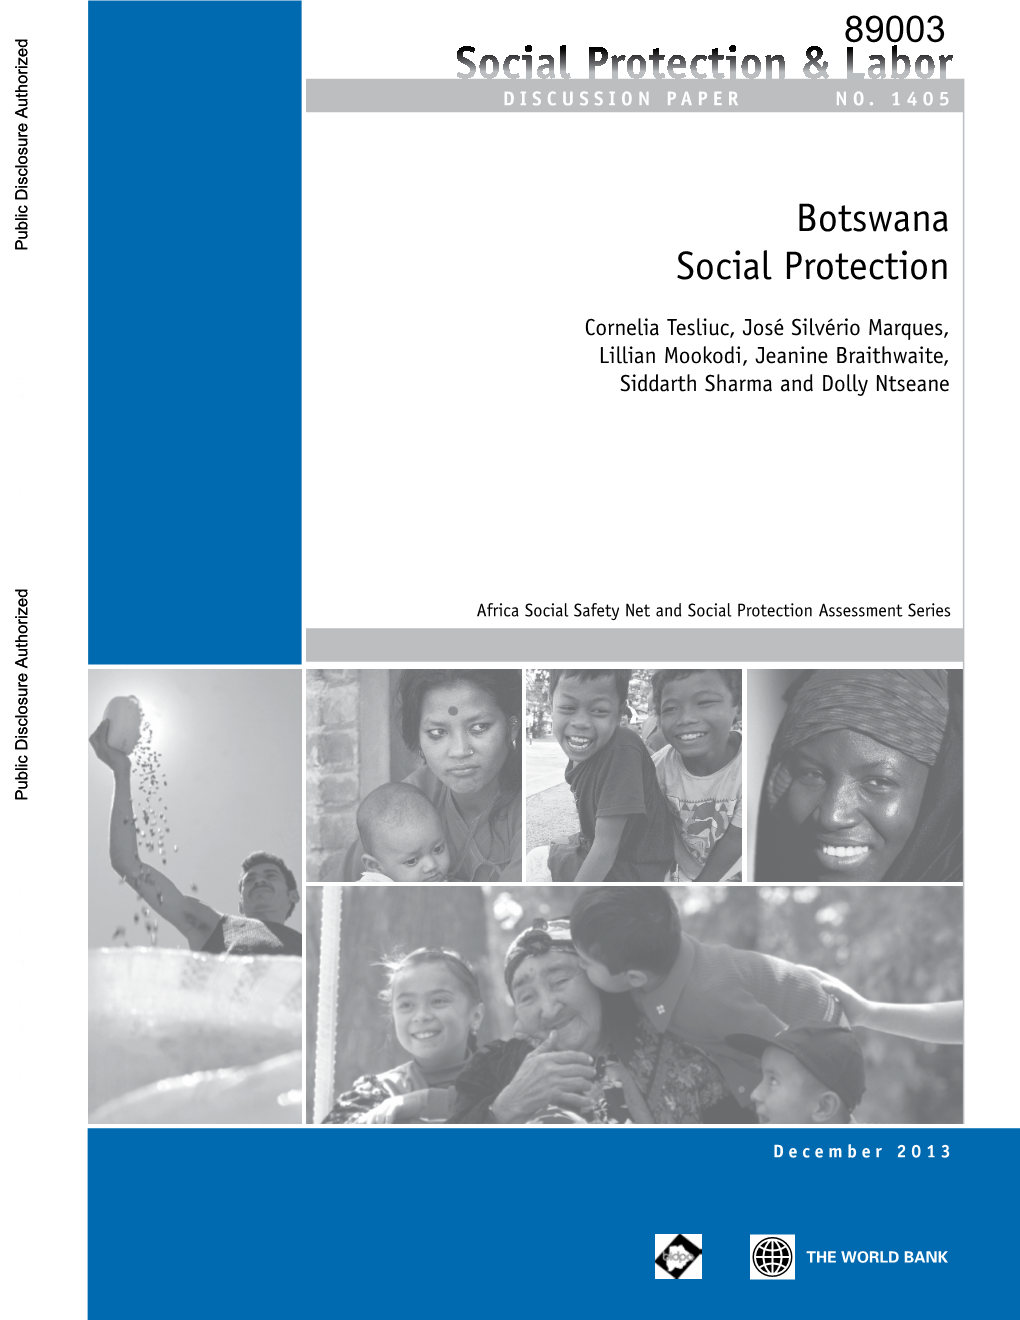 Botswana Social Protection by Cornelia Tesliuc, José Silvério Marques, Lillian Mookodi, Jeanine Braithwaite, Siddarth Sharma and Dolly Ntseane, December 2013